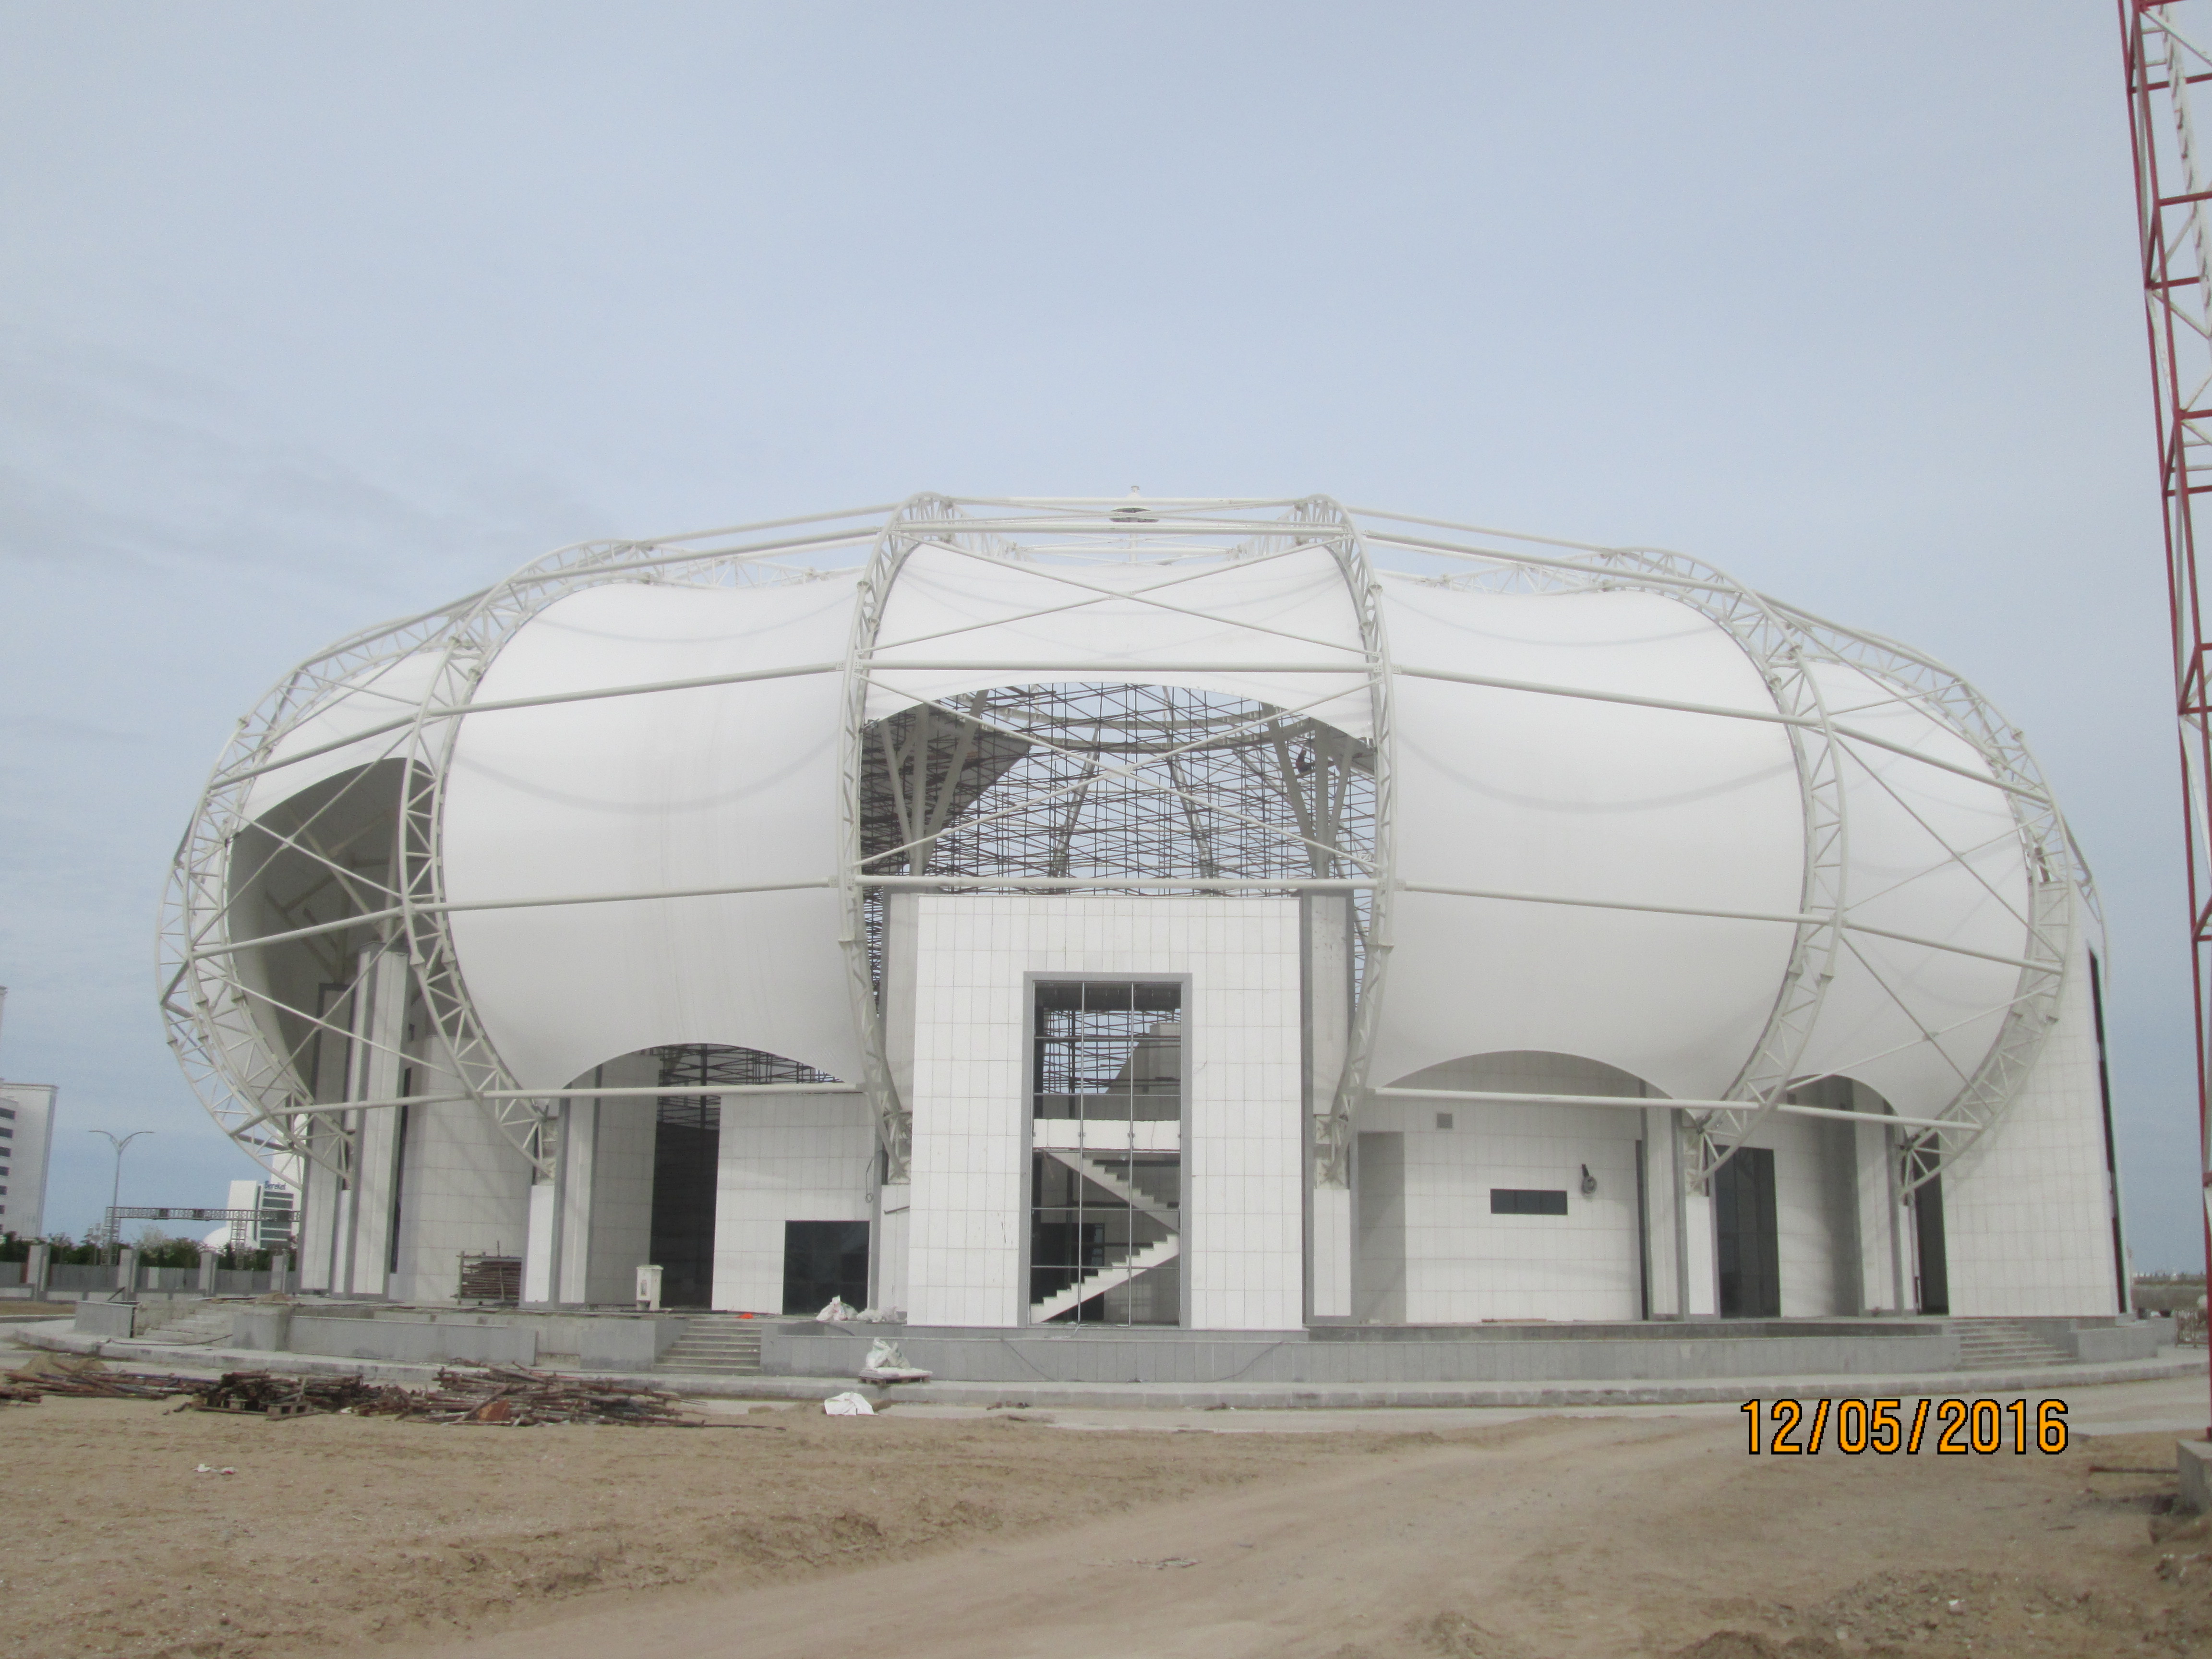 Türkmenistan Aquapark Projesi